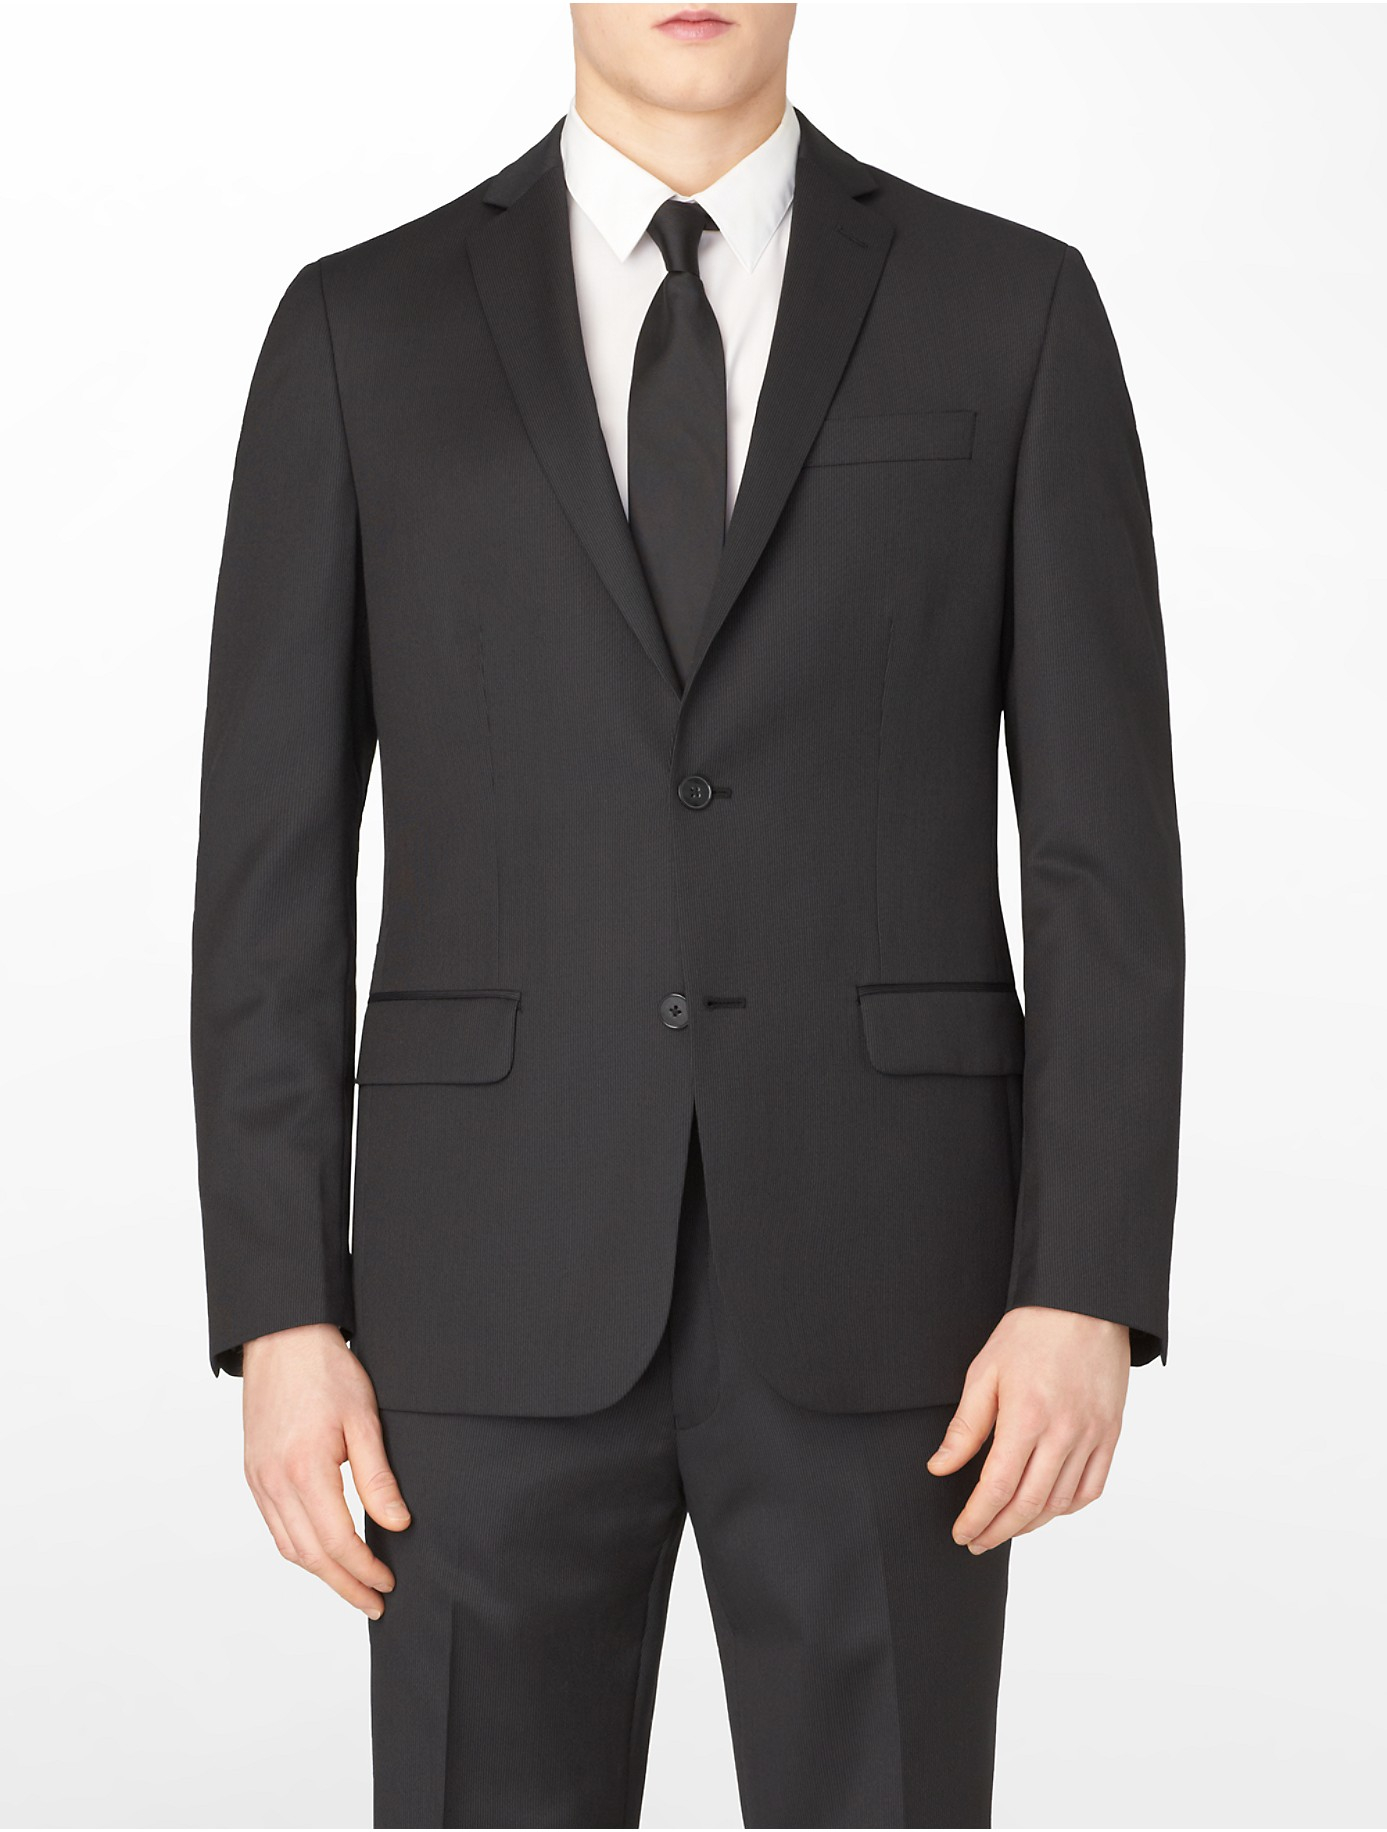 Calvin klein White Label Classic Fit Black Pinstripe Wool Suit Jacket ...